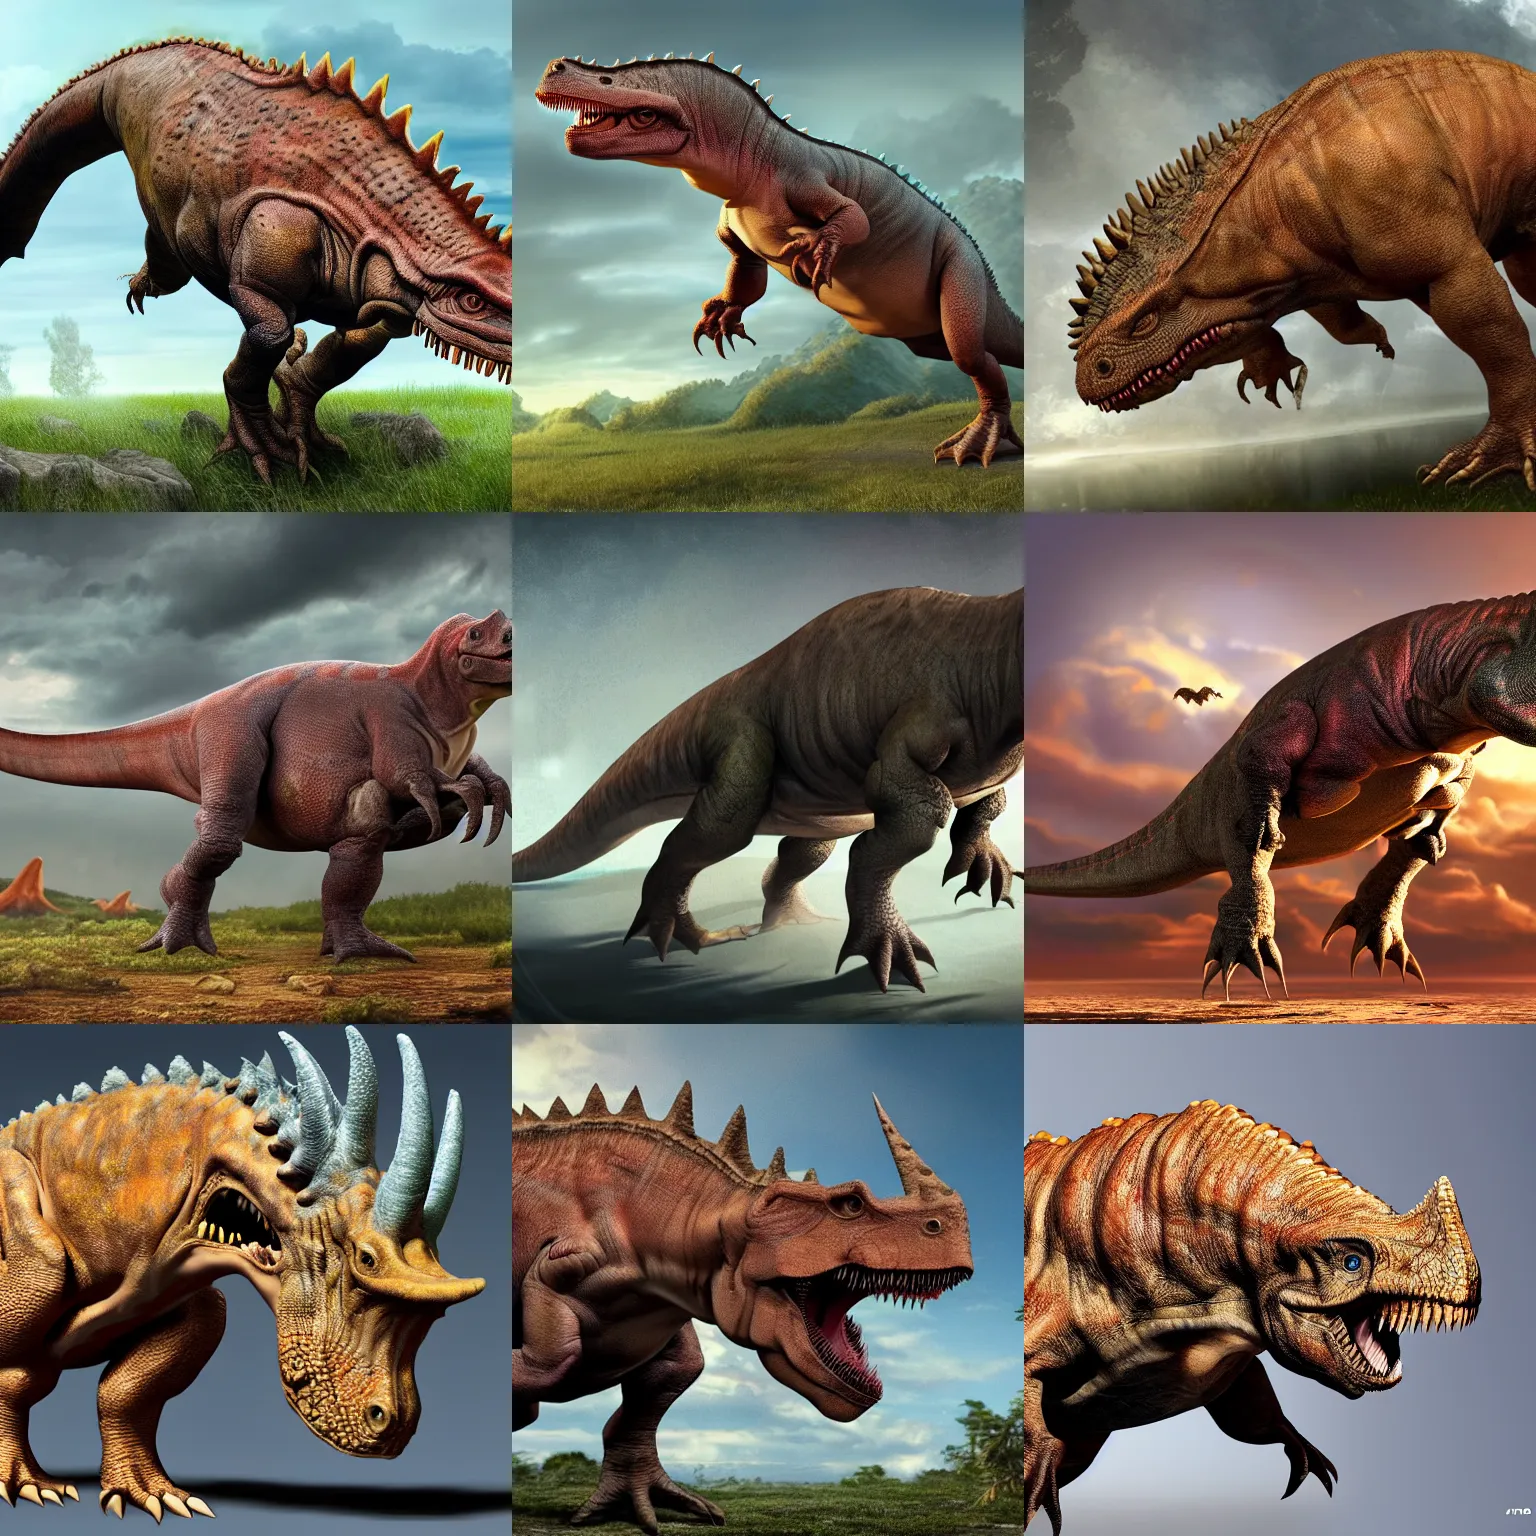 Prompt: Dinosaur hybrid between Triceratops and Pachycephalosaurus, hyper realistic, 4k resolution